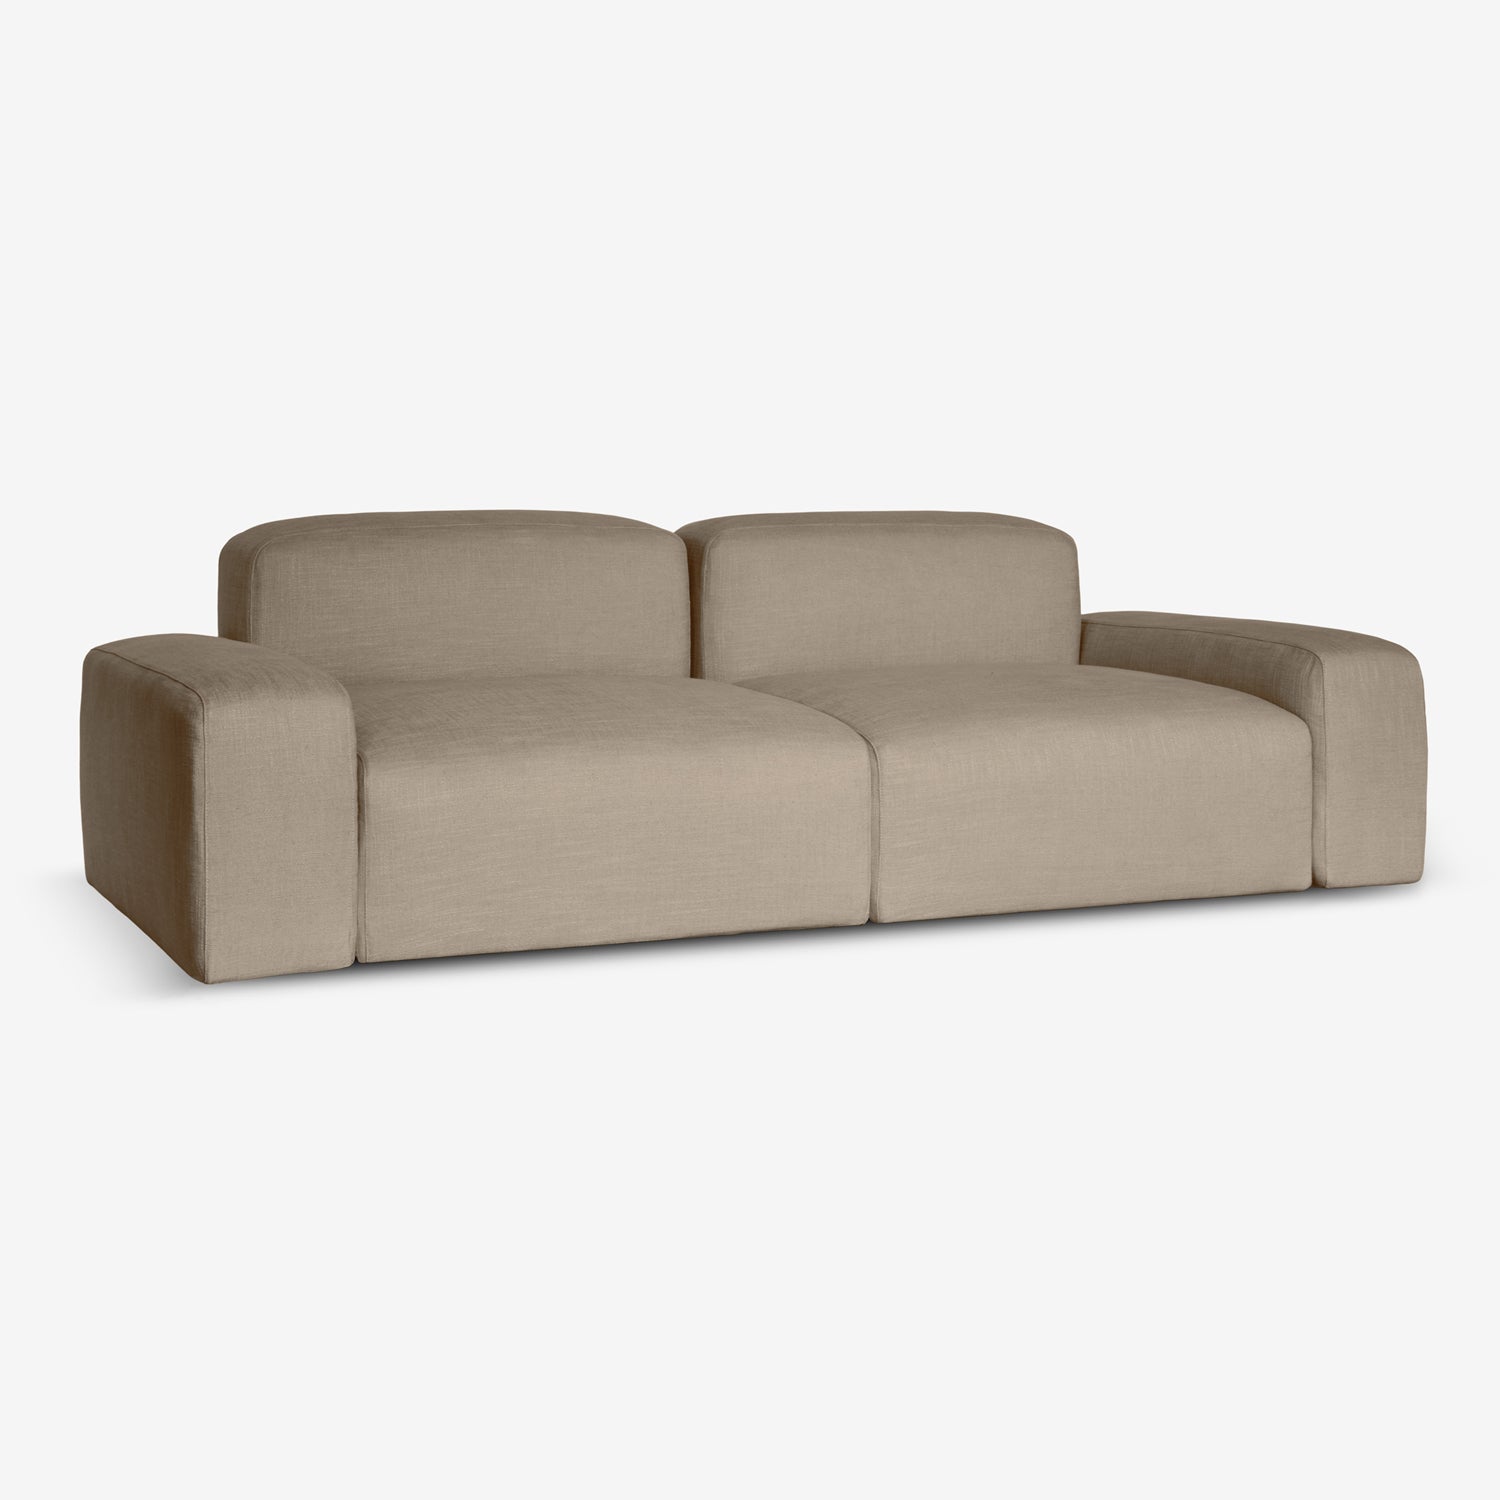 Innovative Sustainable Sofa Design in beige